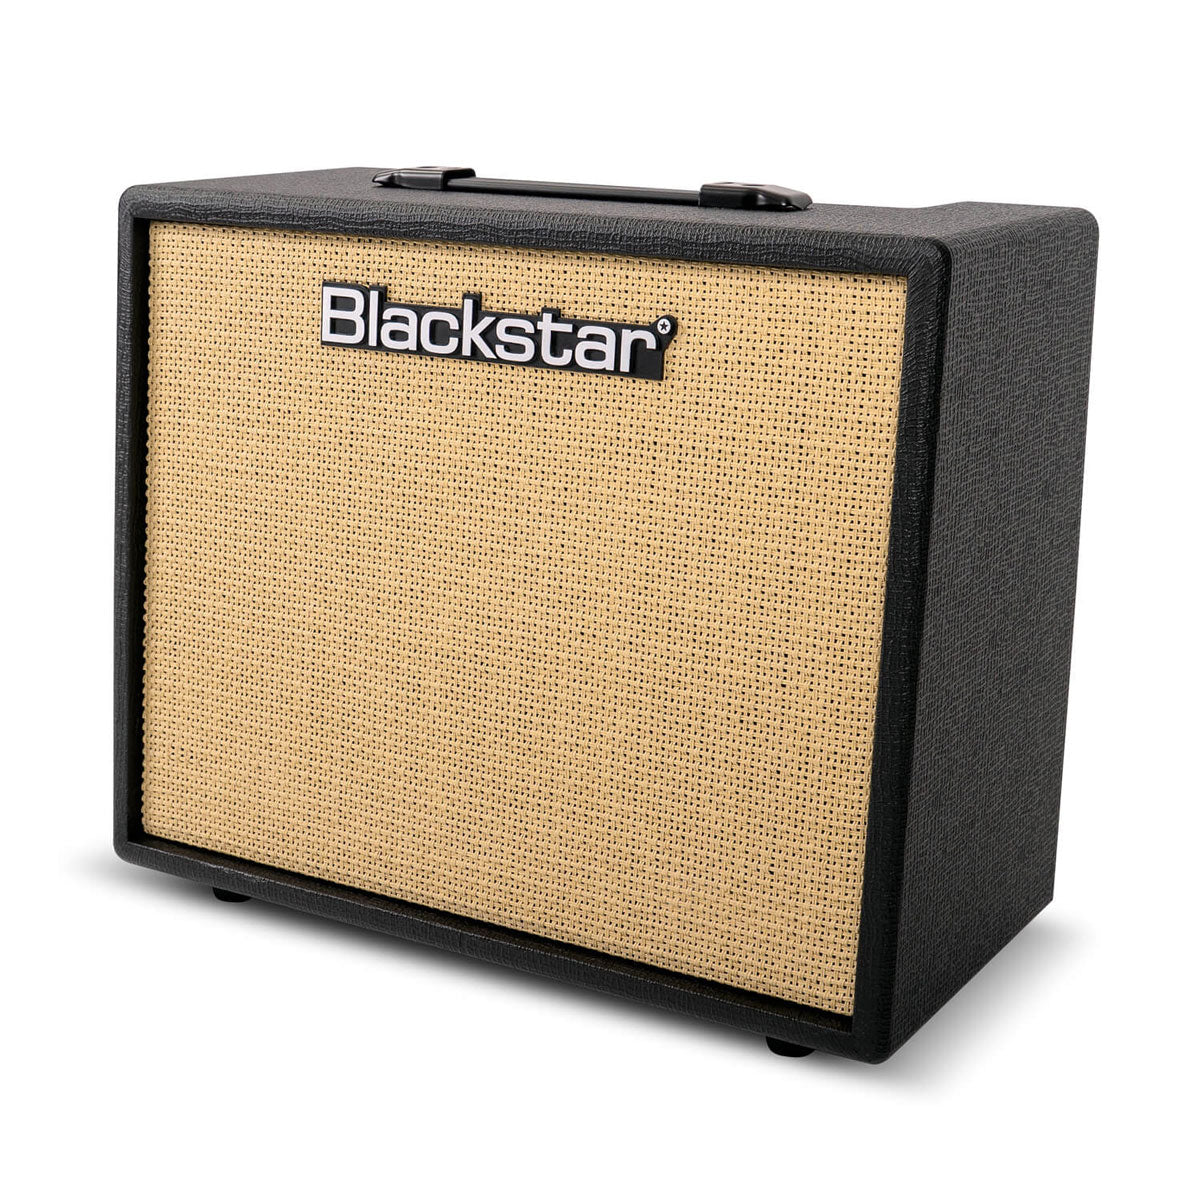 Blackstar Debut 50R 1x12 Inch 50-Watt Guitar Combo Amplifier